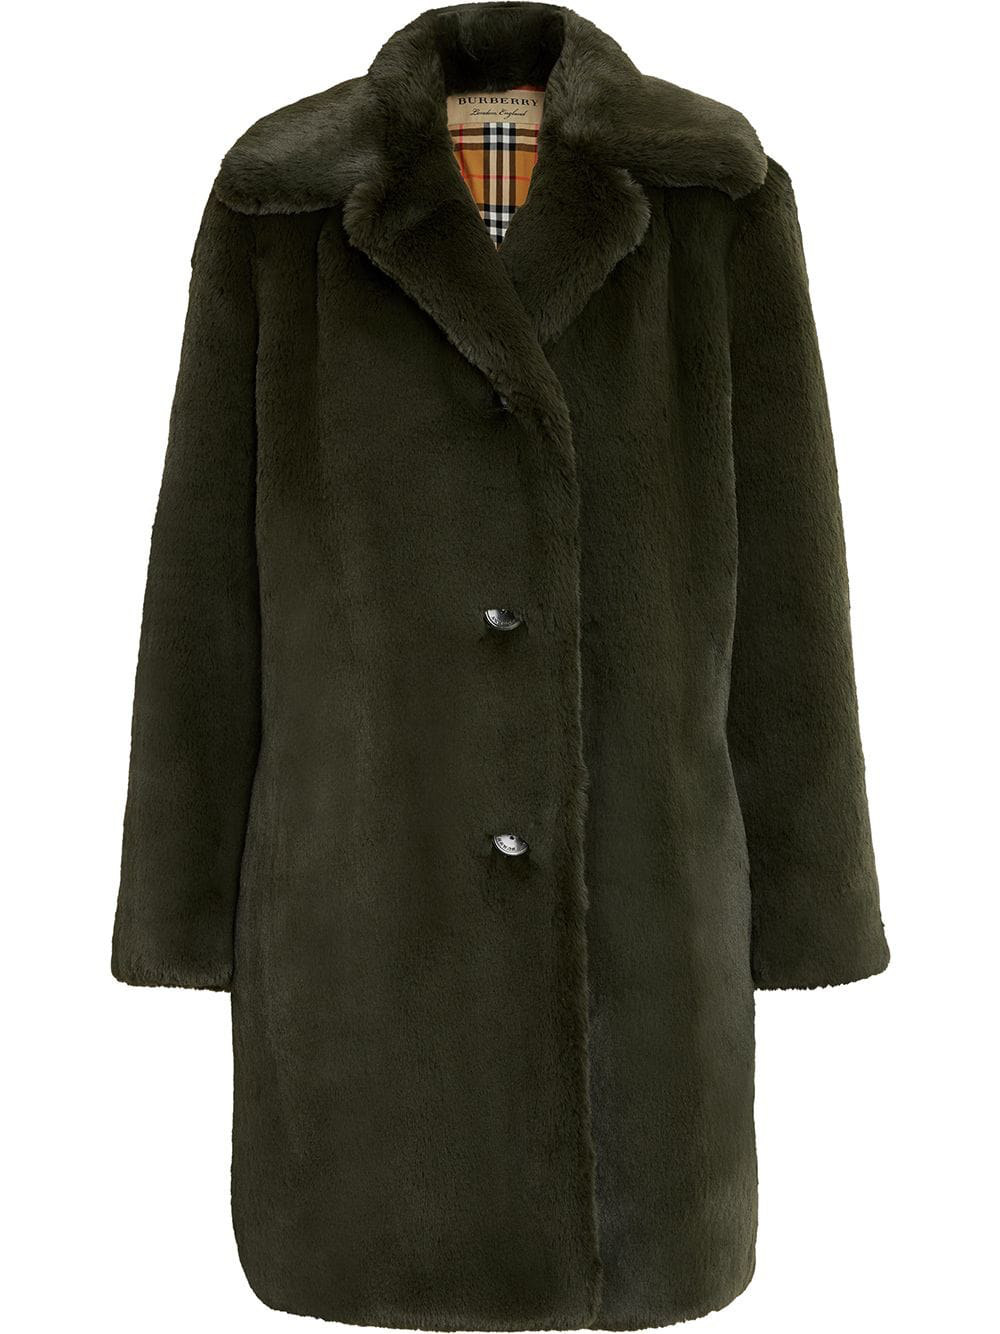 burberry fur jacket